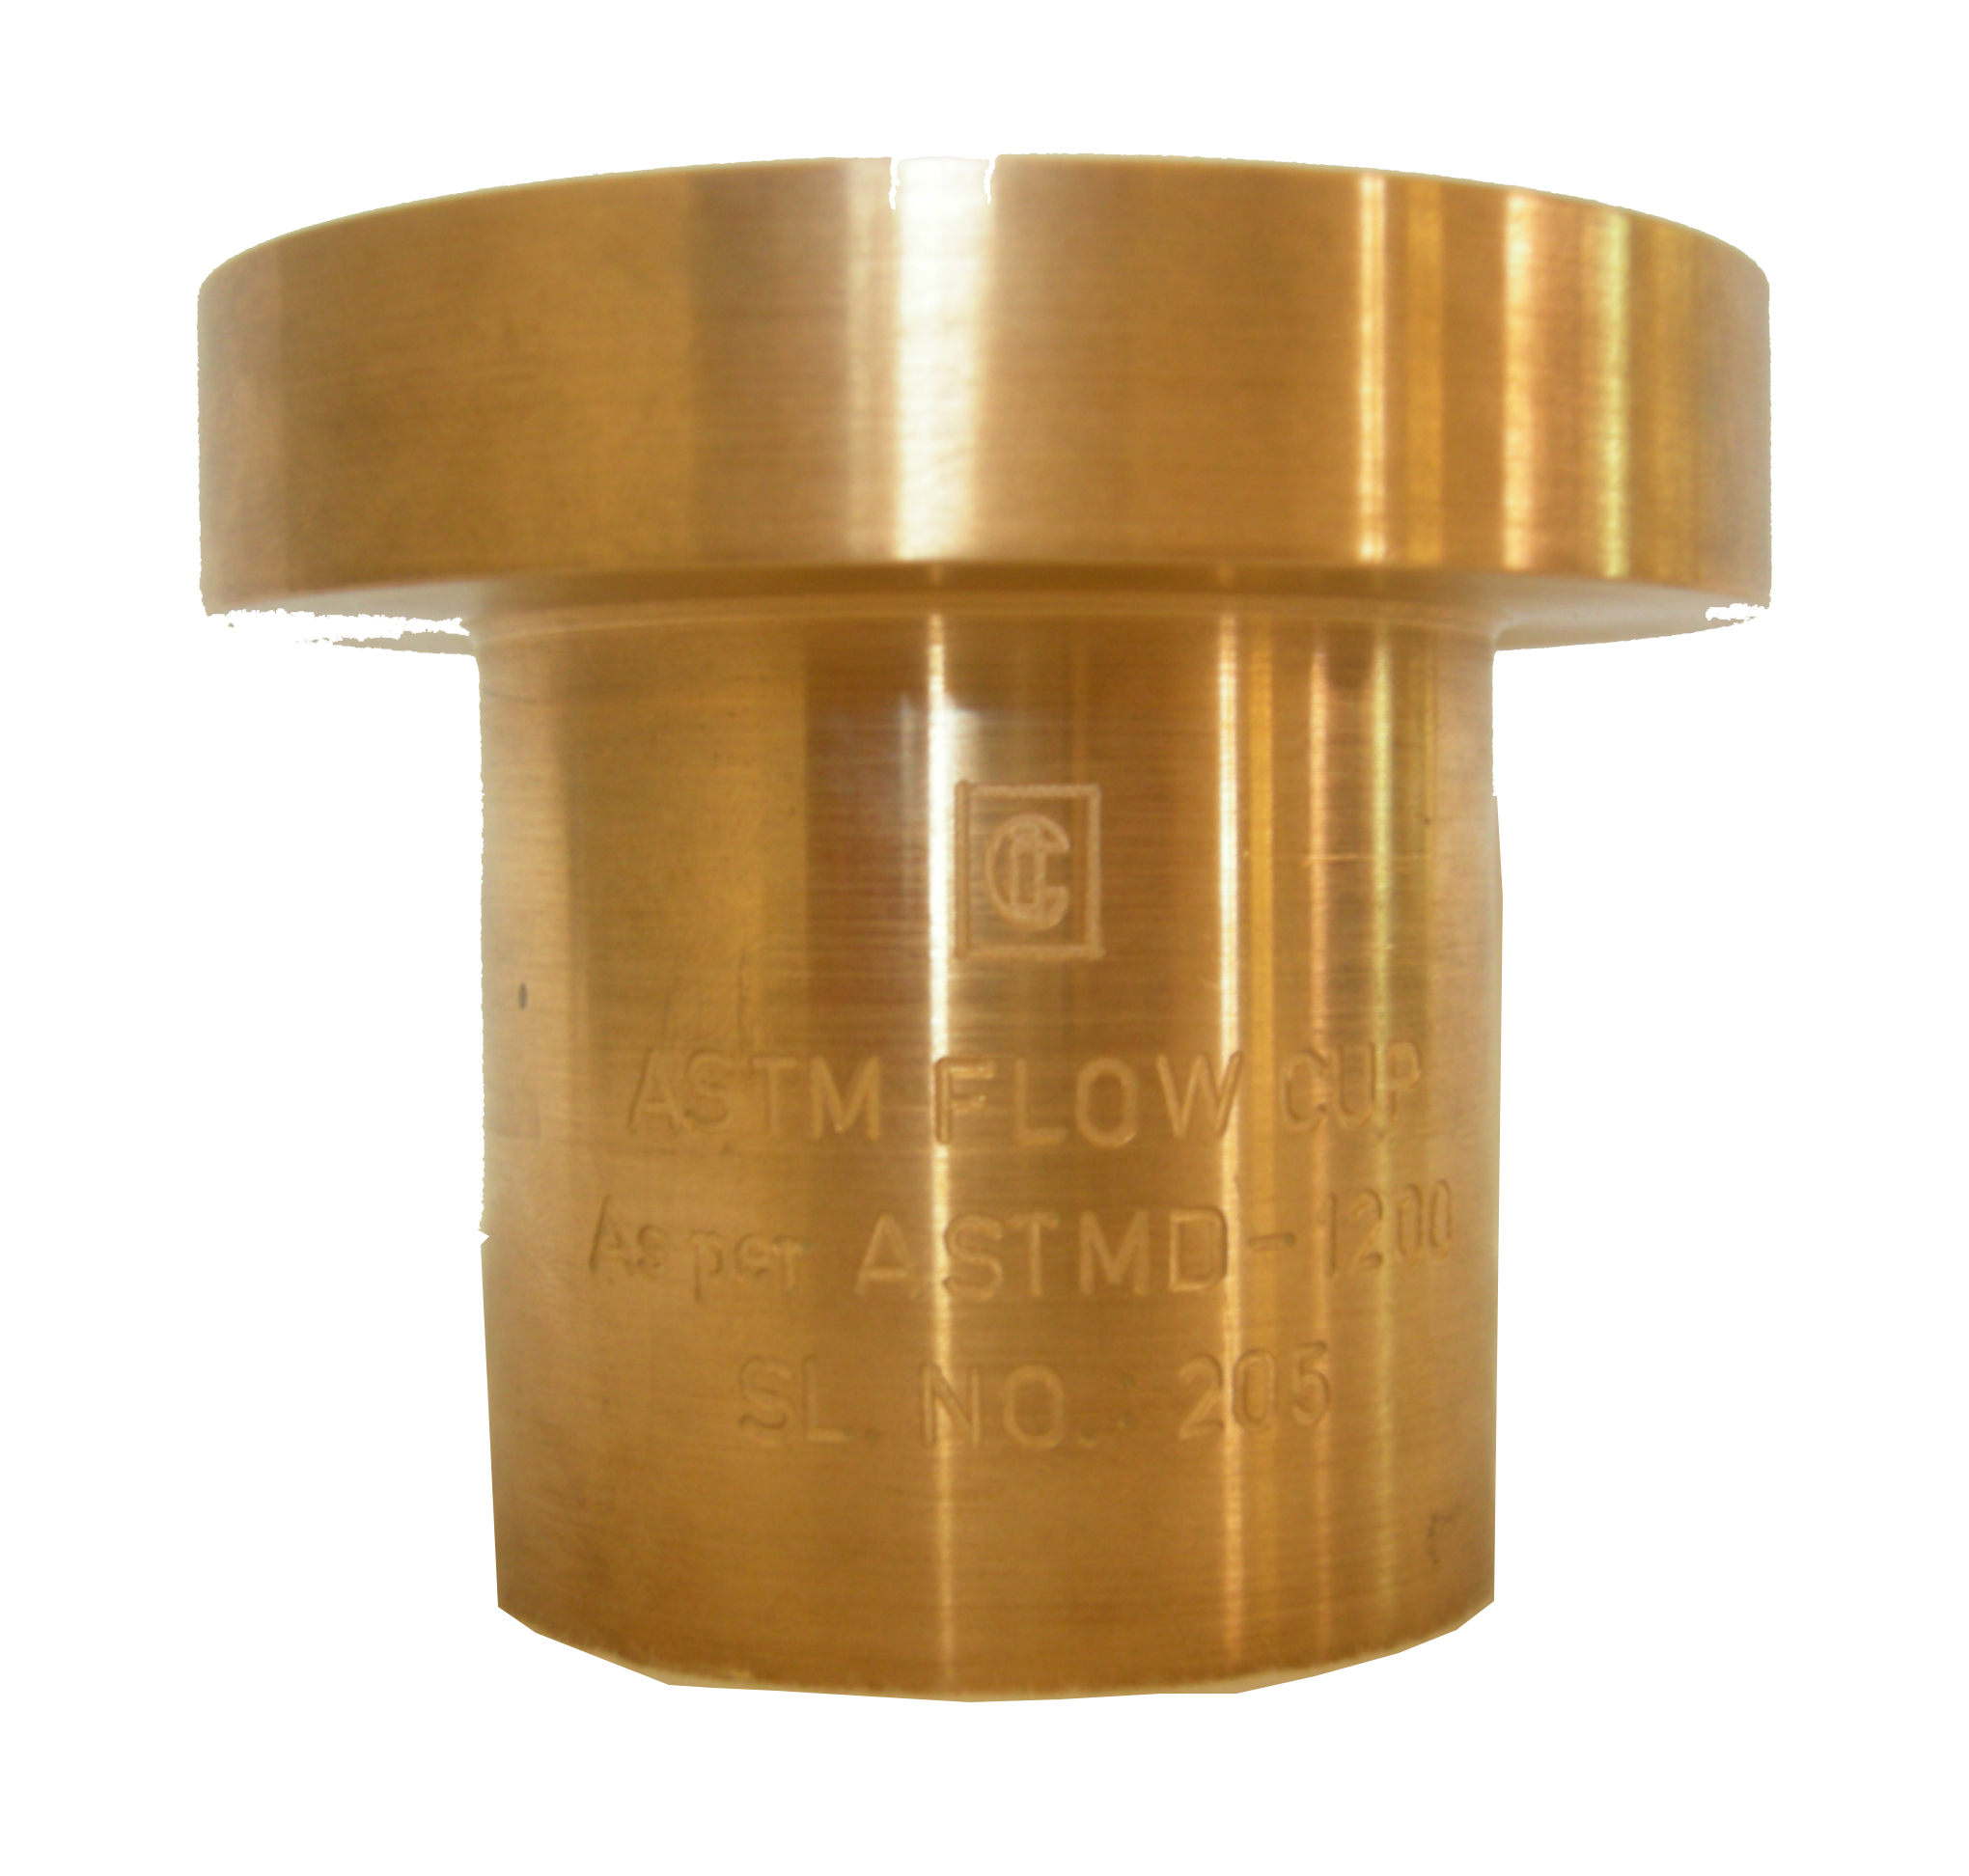 FLOW / FORD CUP VISCOMETER(ASTM-D 1200)